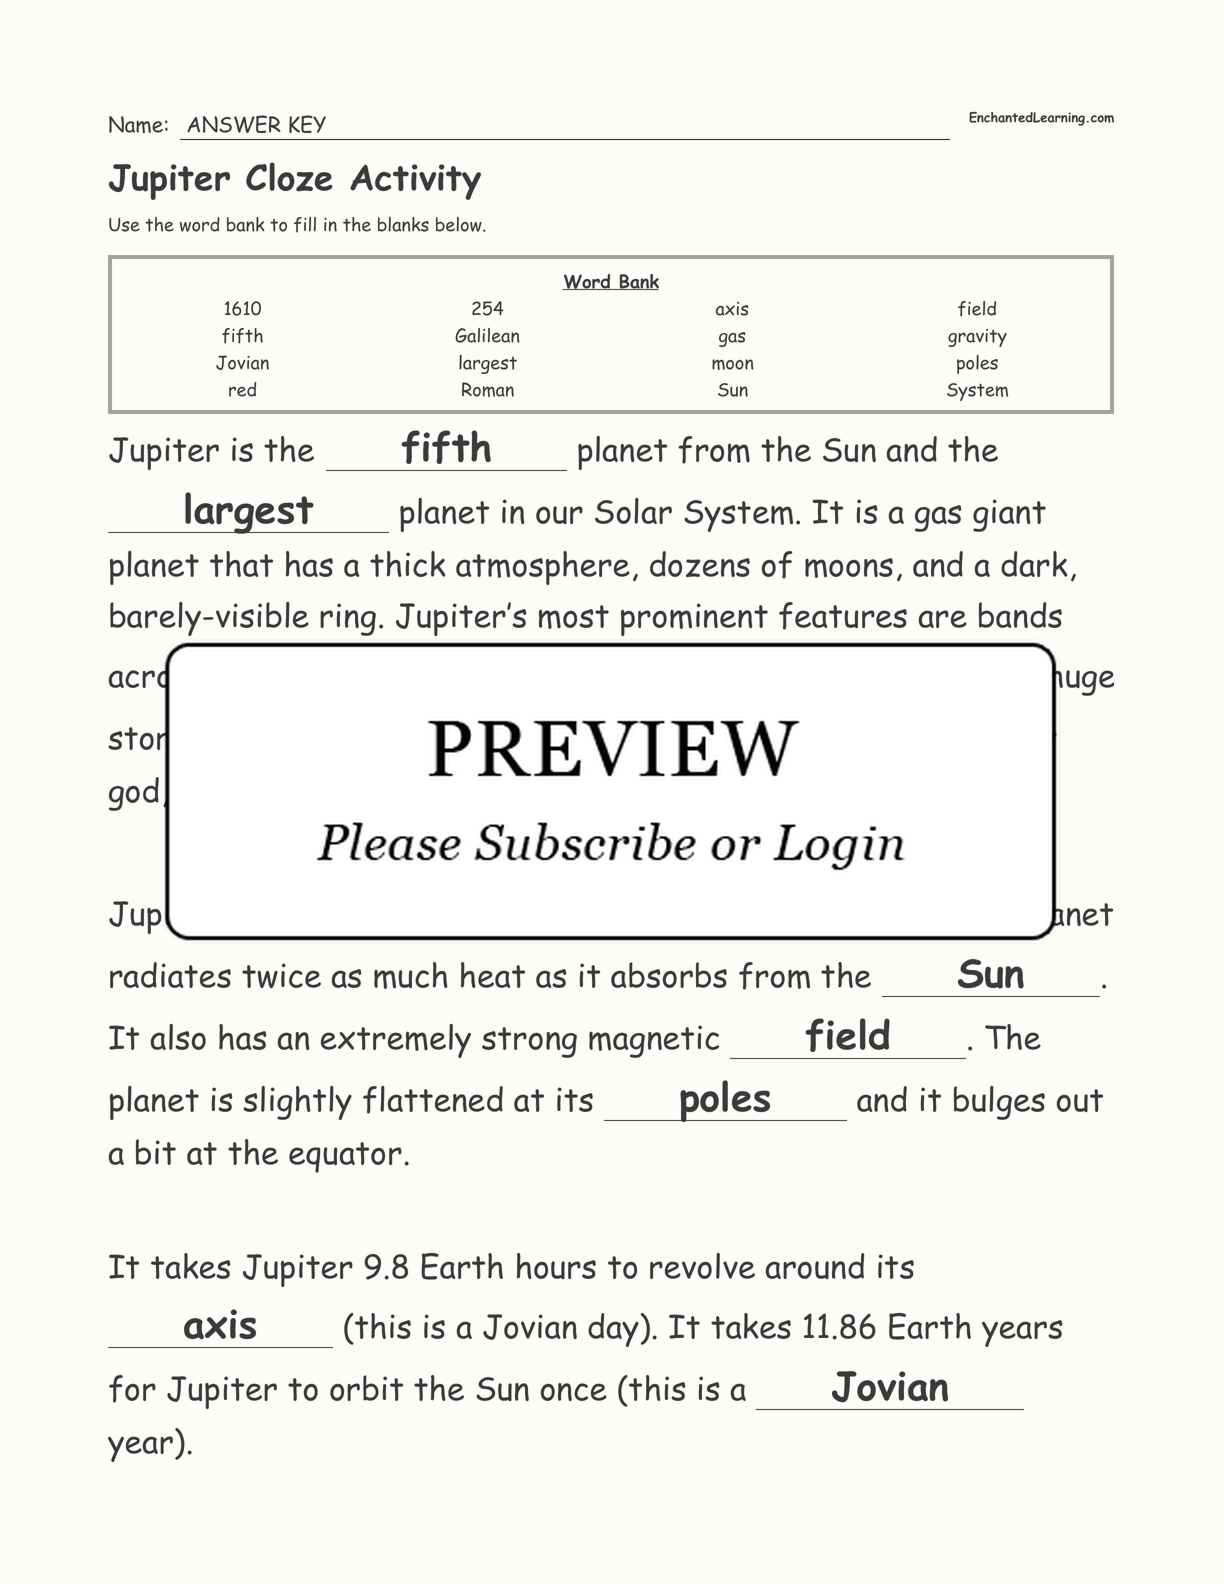 Jupiter Cloze Activity interactive worksheet page 3